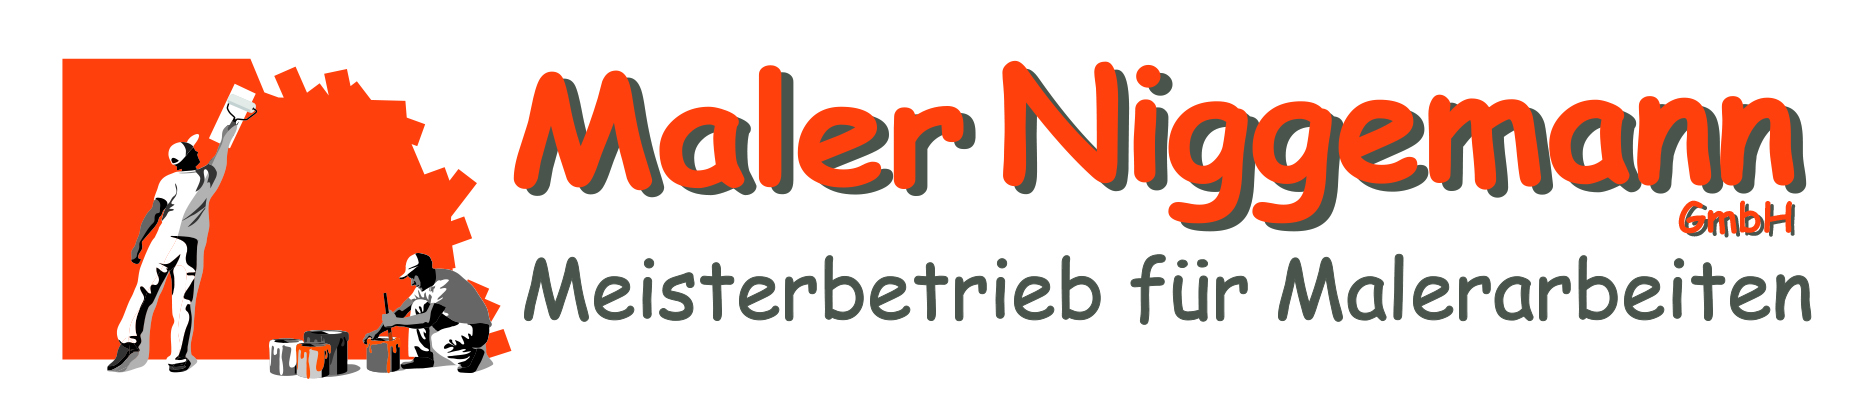 Logo Maler Niggemann komplett